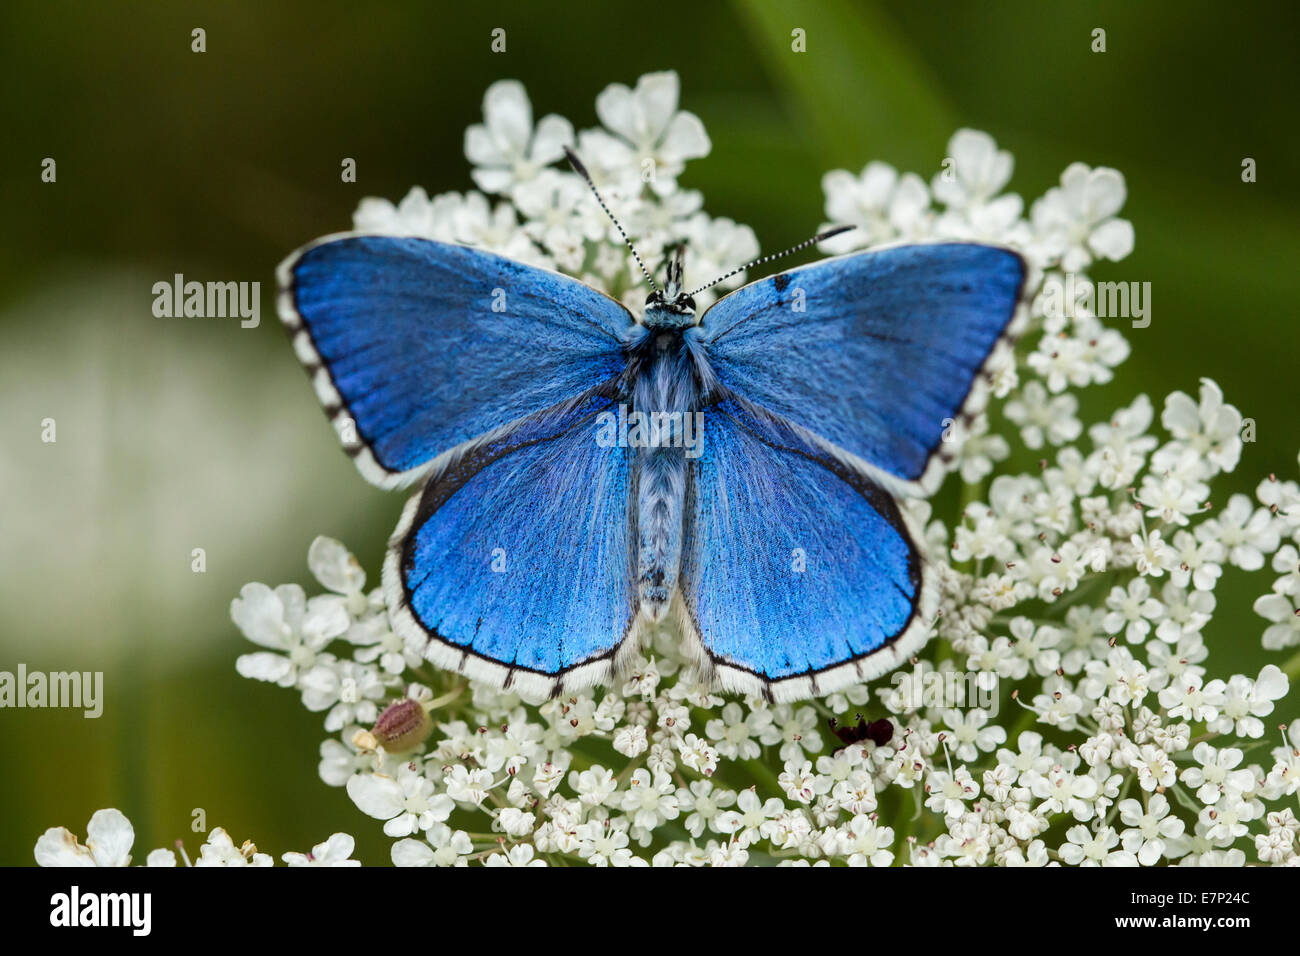 Animal, Insect, Butterfly, Lepidoptera, Arthropoda, Blue, Polyommatus bellargus, Flower, Adonis Blue, White Stock Photo